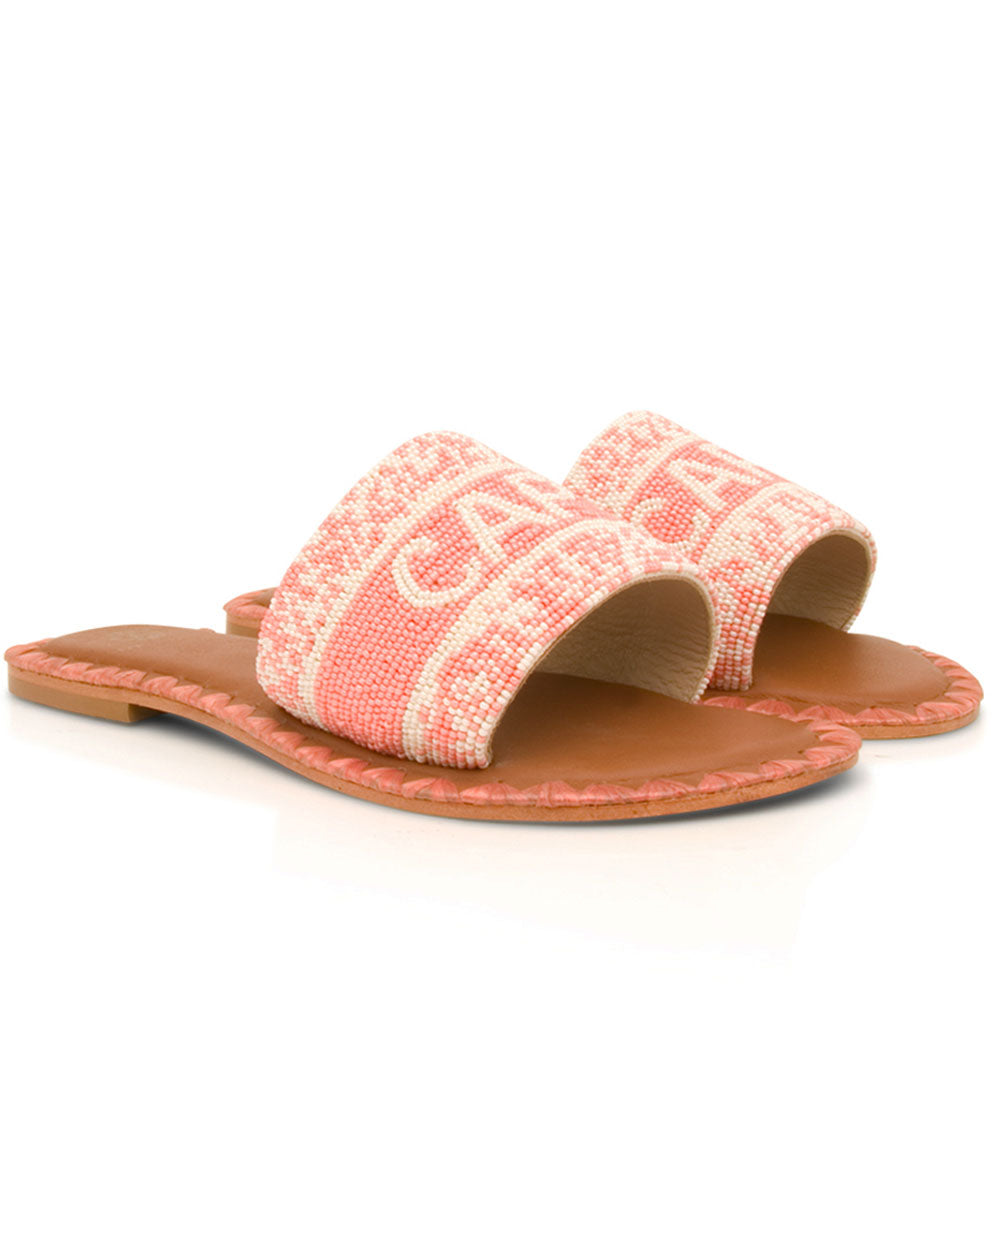 Capri Slide Sandal in Rose